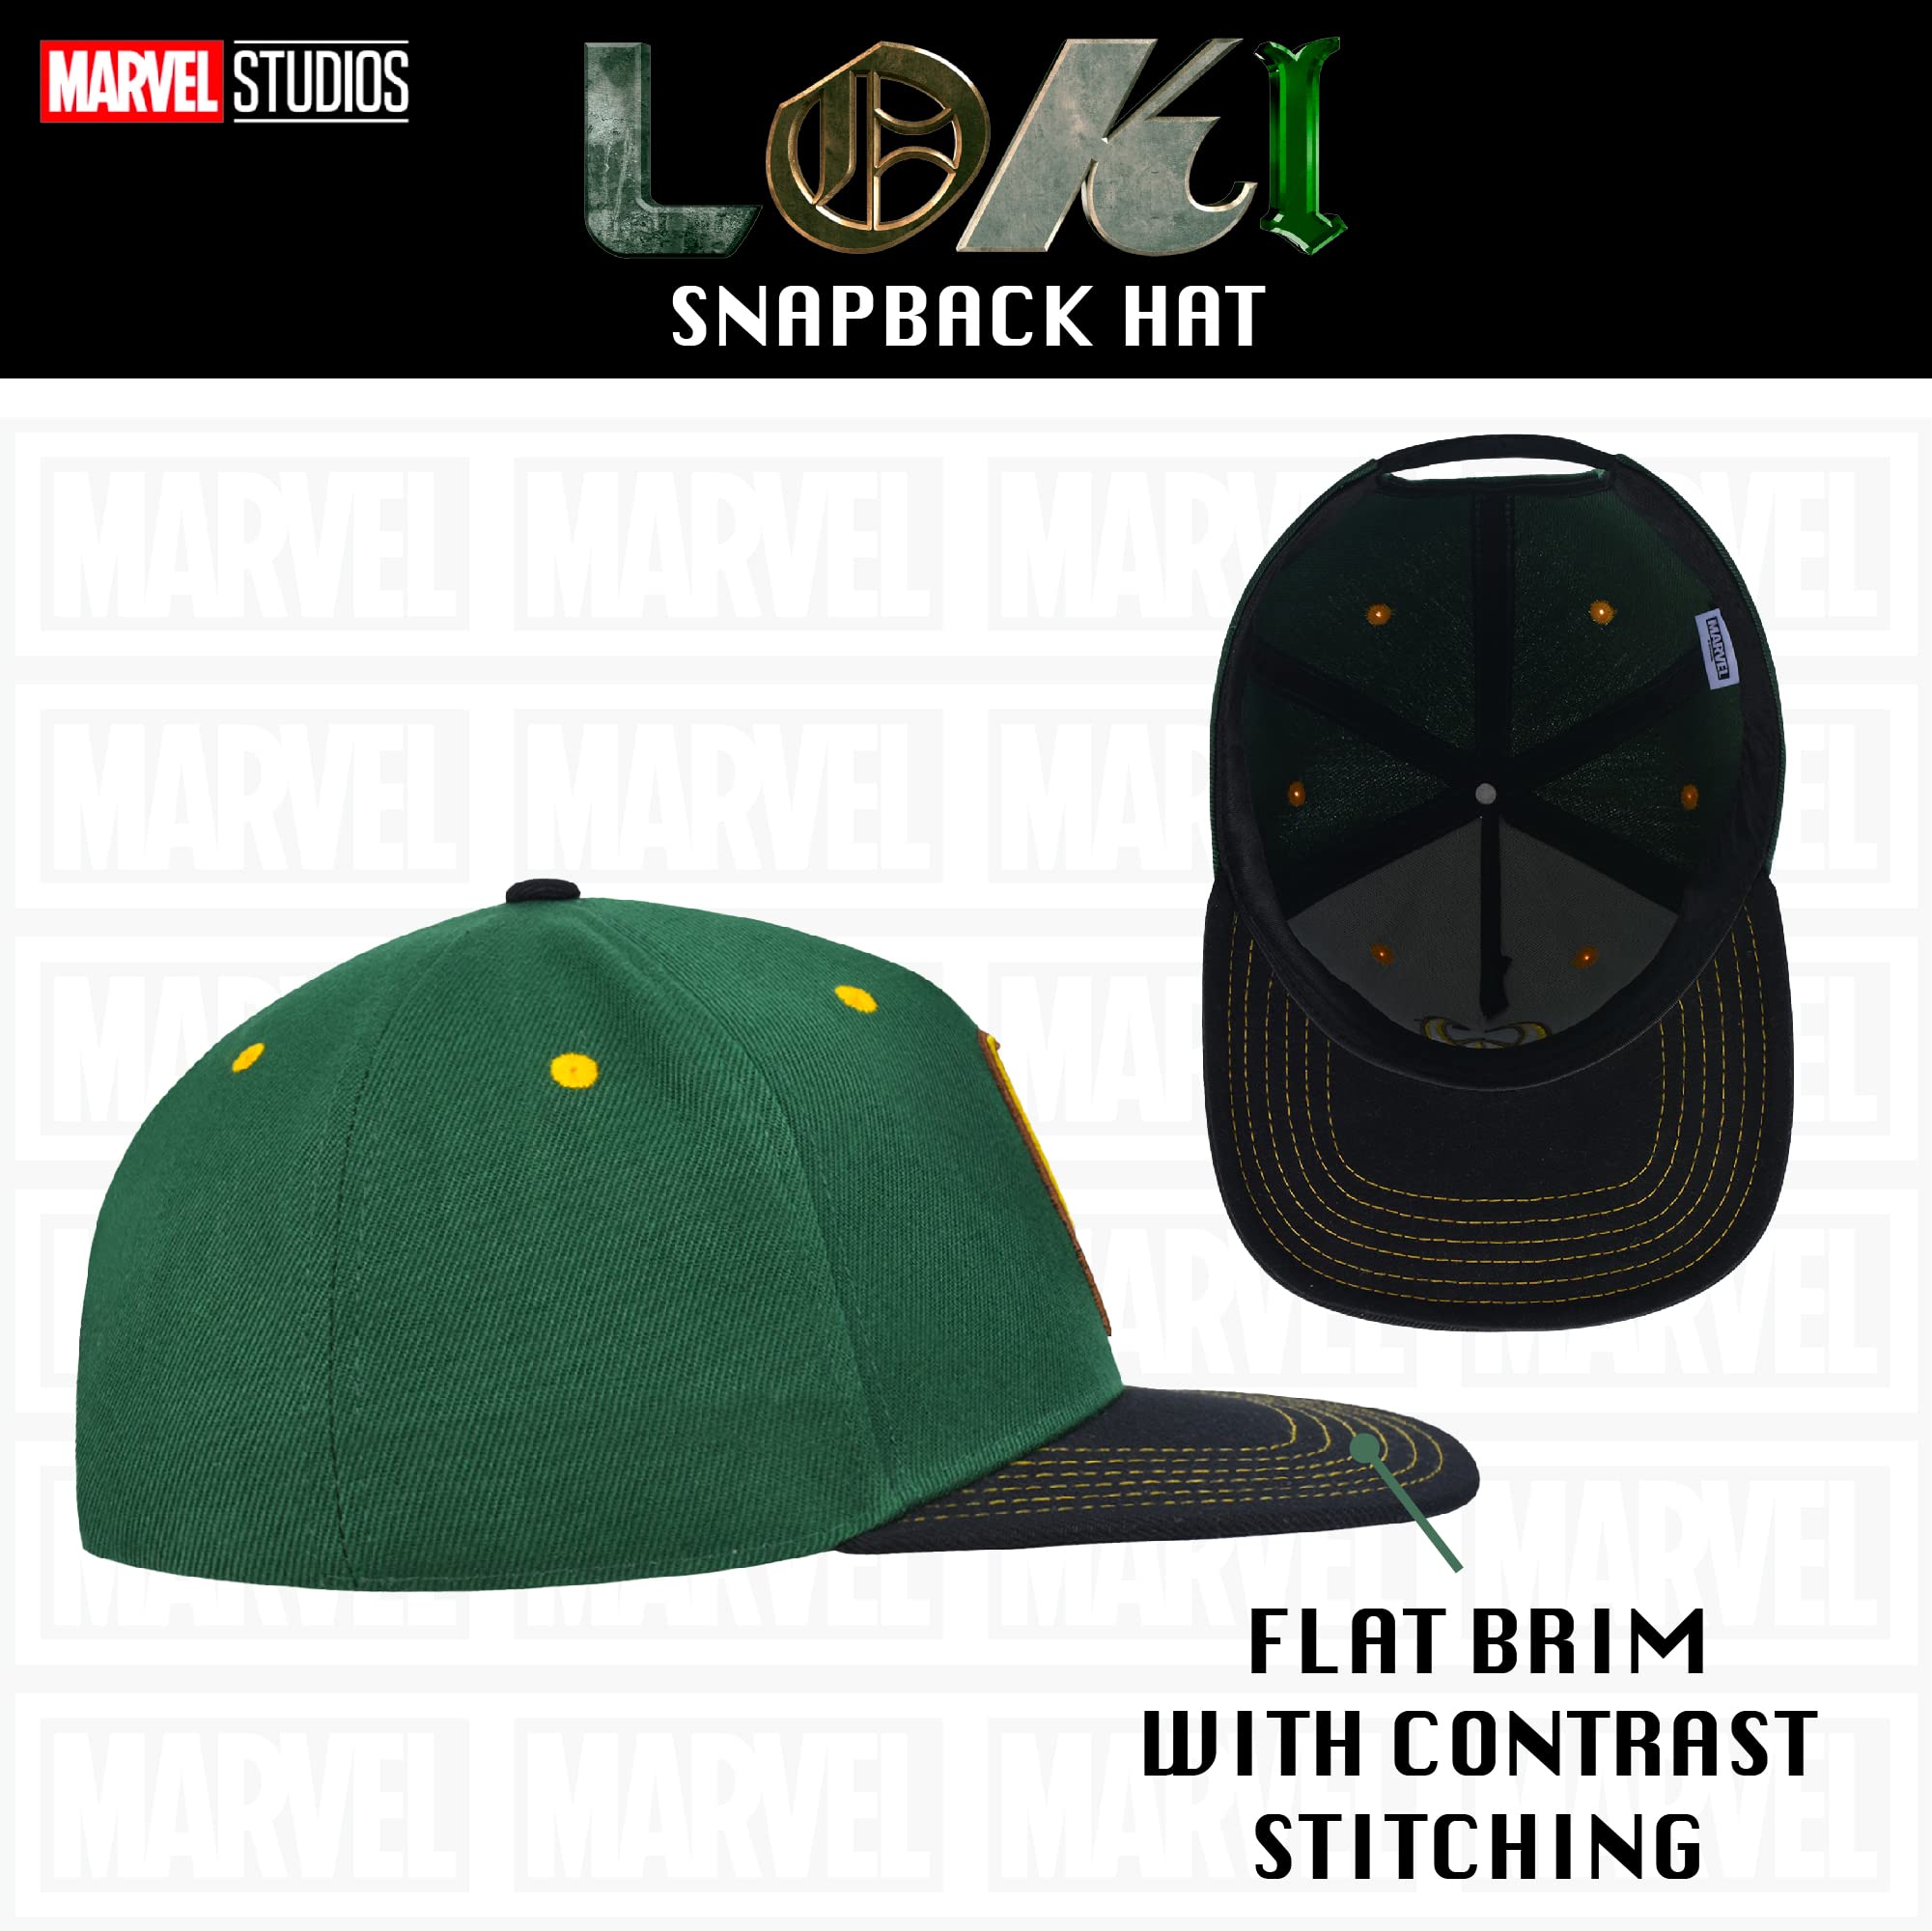 Marvel Loki Baseball Hat, Gold Embroidered Logo Adult Snapback Cap with Flat Brim, Green, One Size